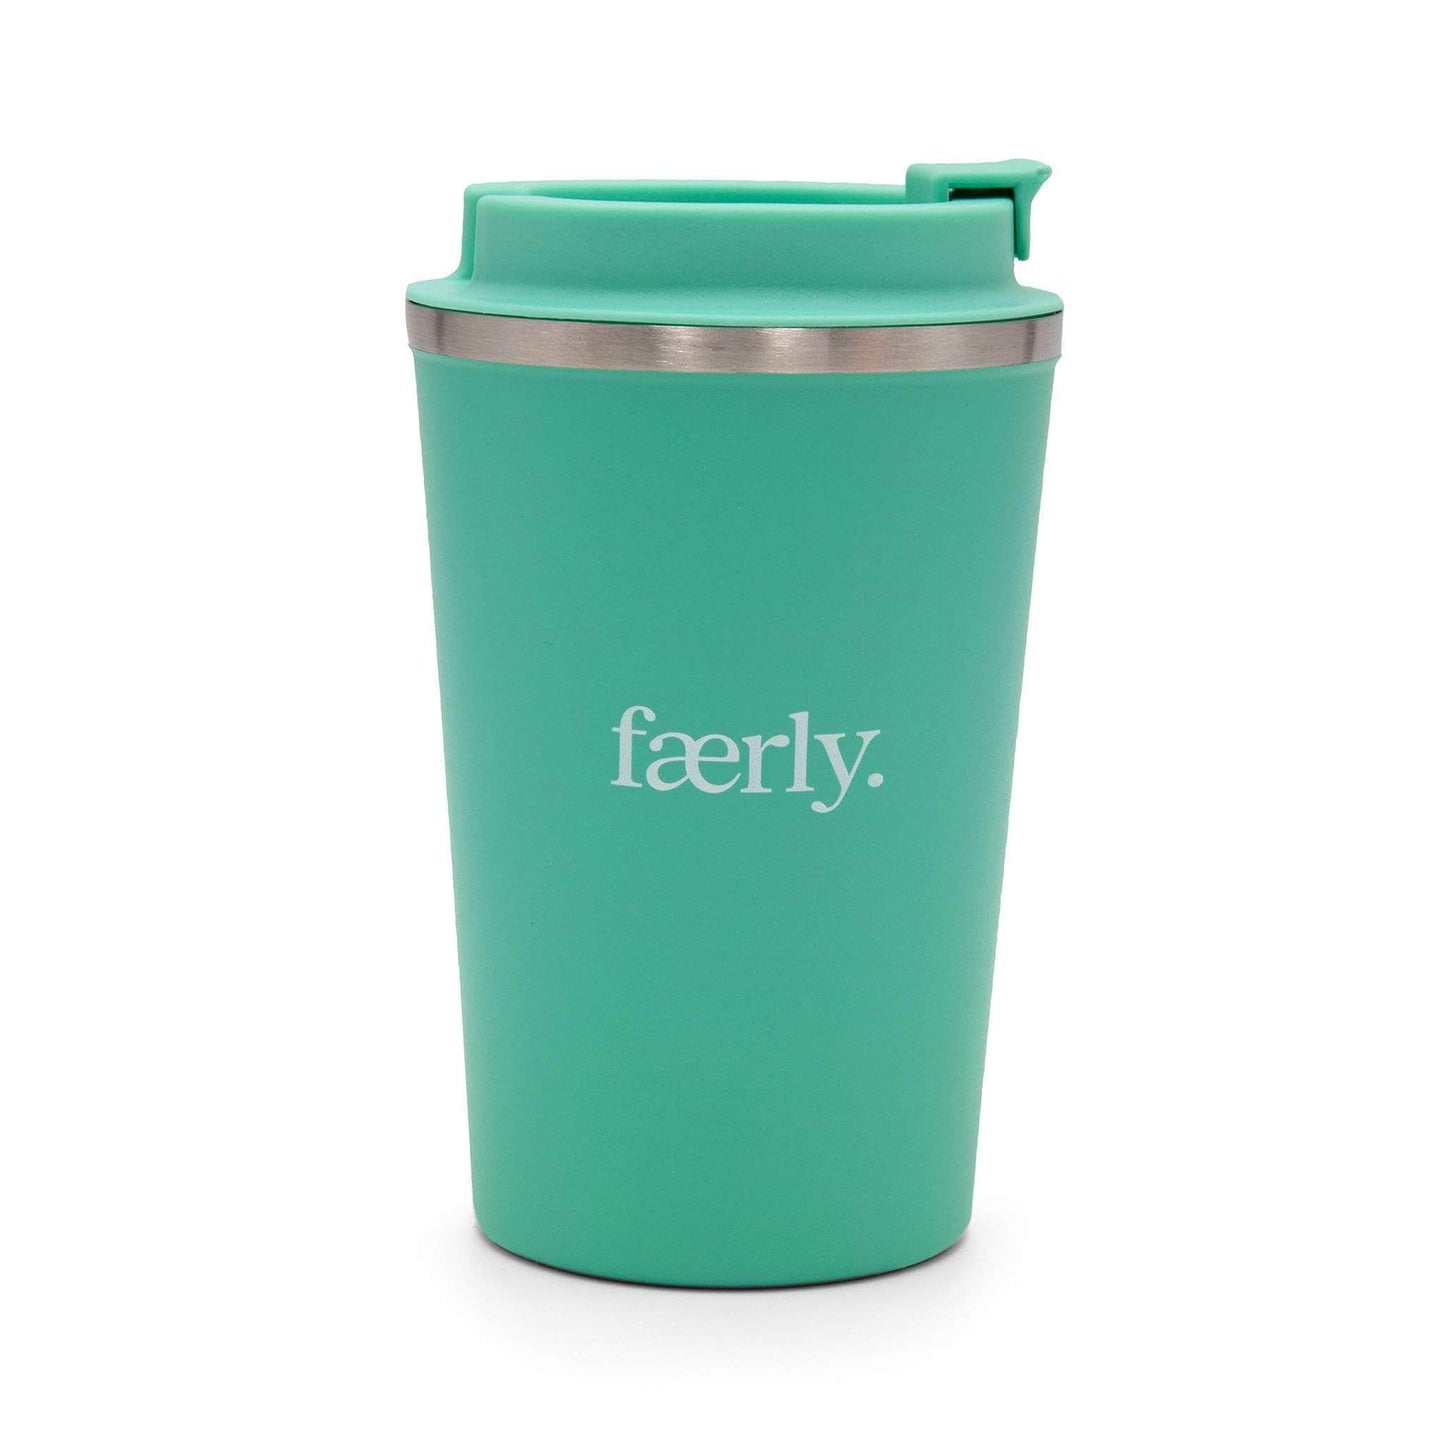 12 oz Turquoise Plastic Cups